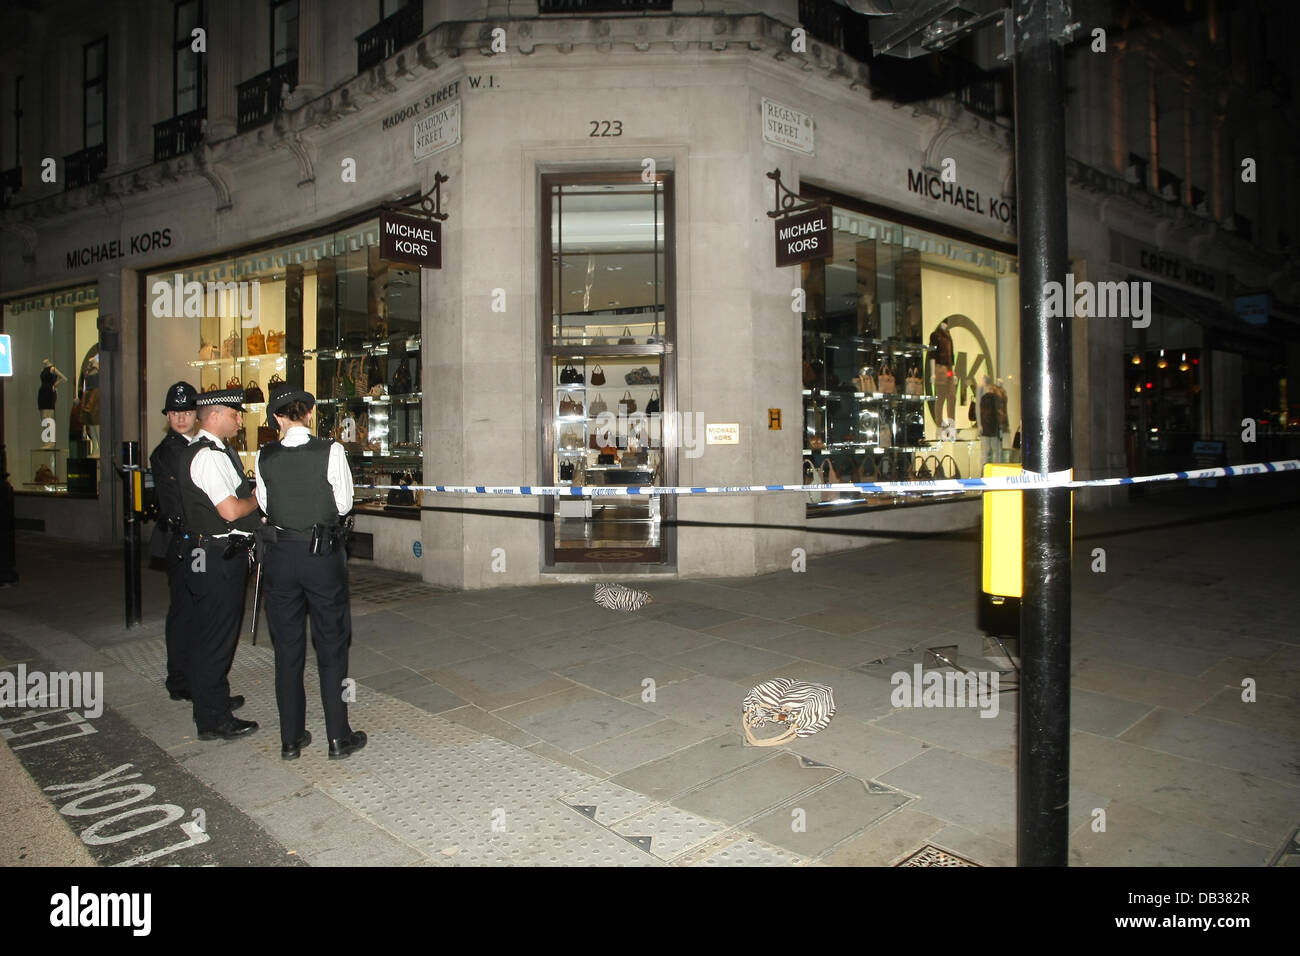 Michael Kors hand bag shop was vandalised on Regent Street London, England  - 10.04.11 Stock Photo - Alamy